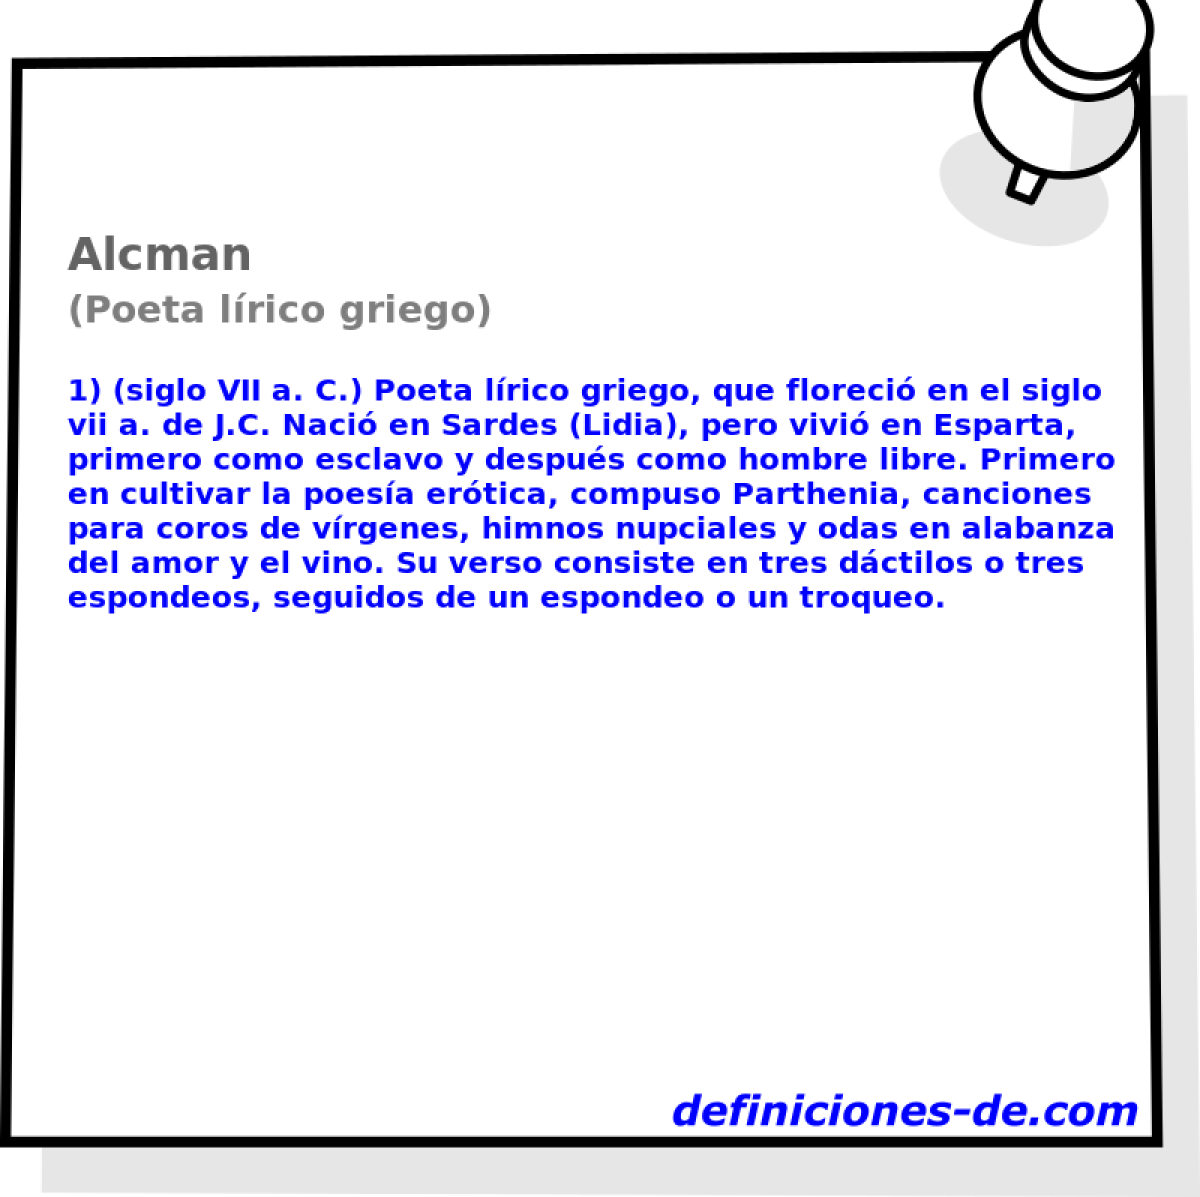 Alcman (Poeta lrico griego)